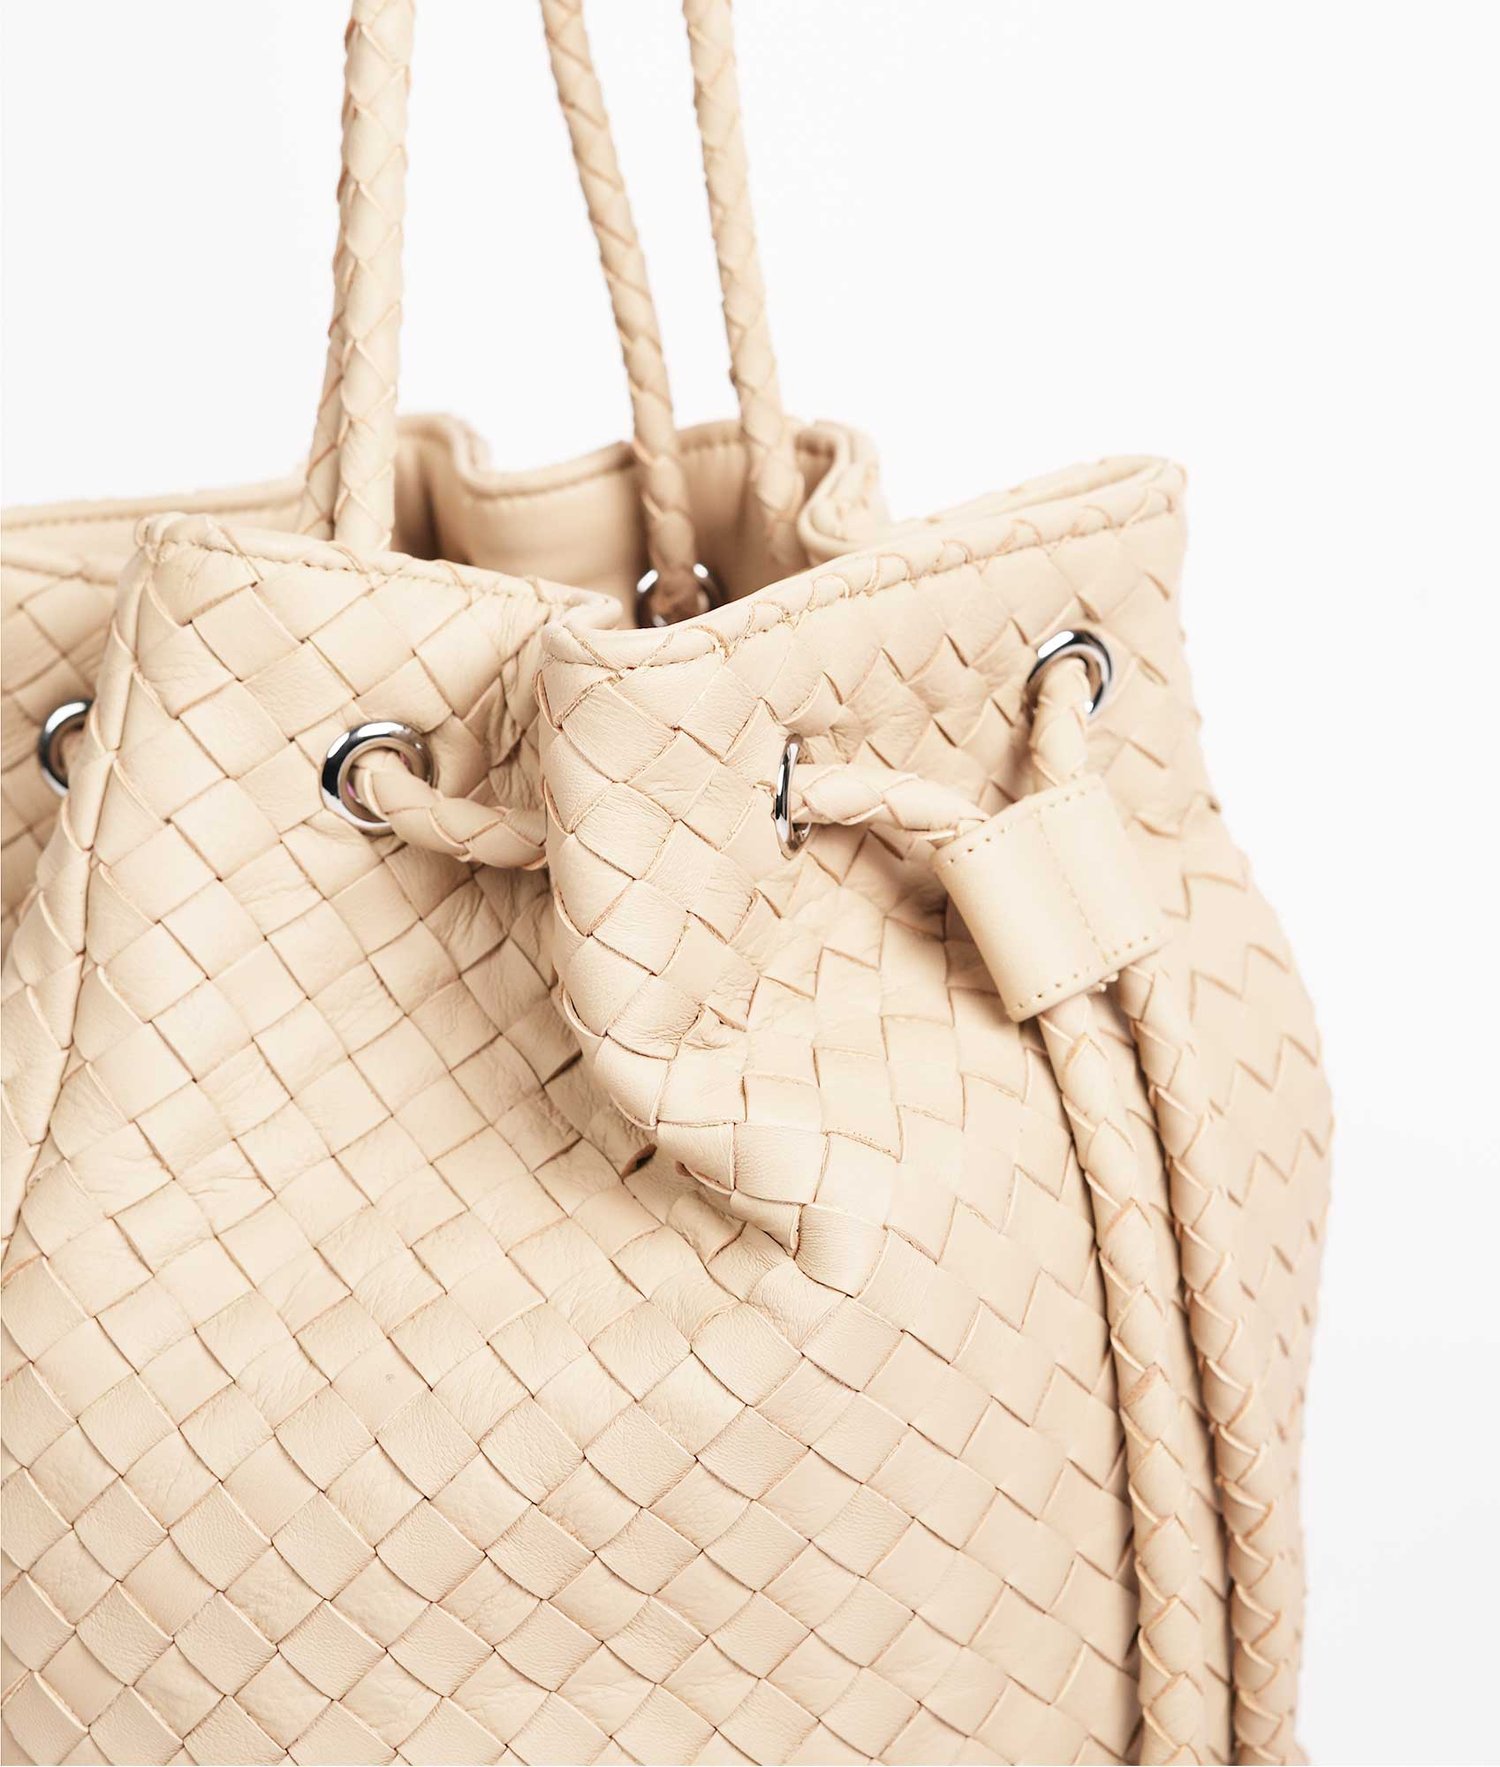 Deux Lux woven handbag  Woven handbags, Handbag, Deux lux